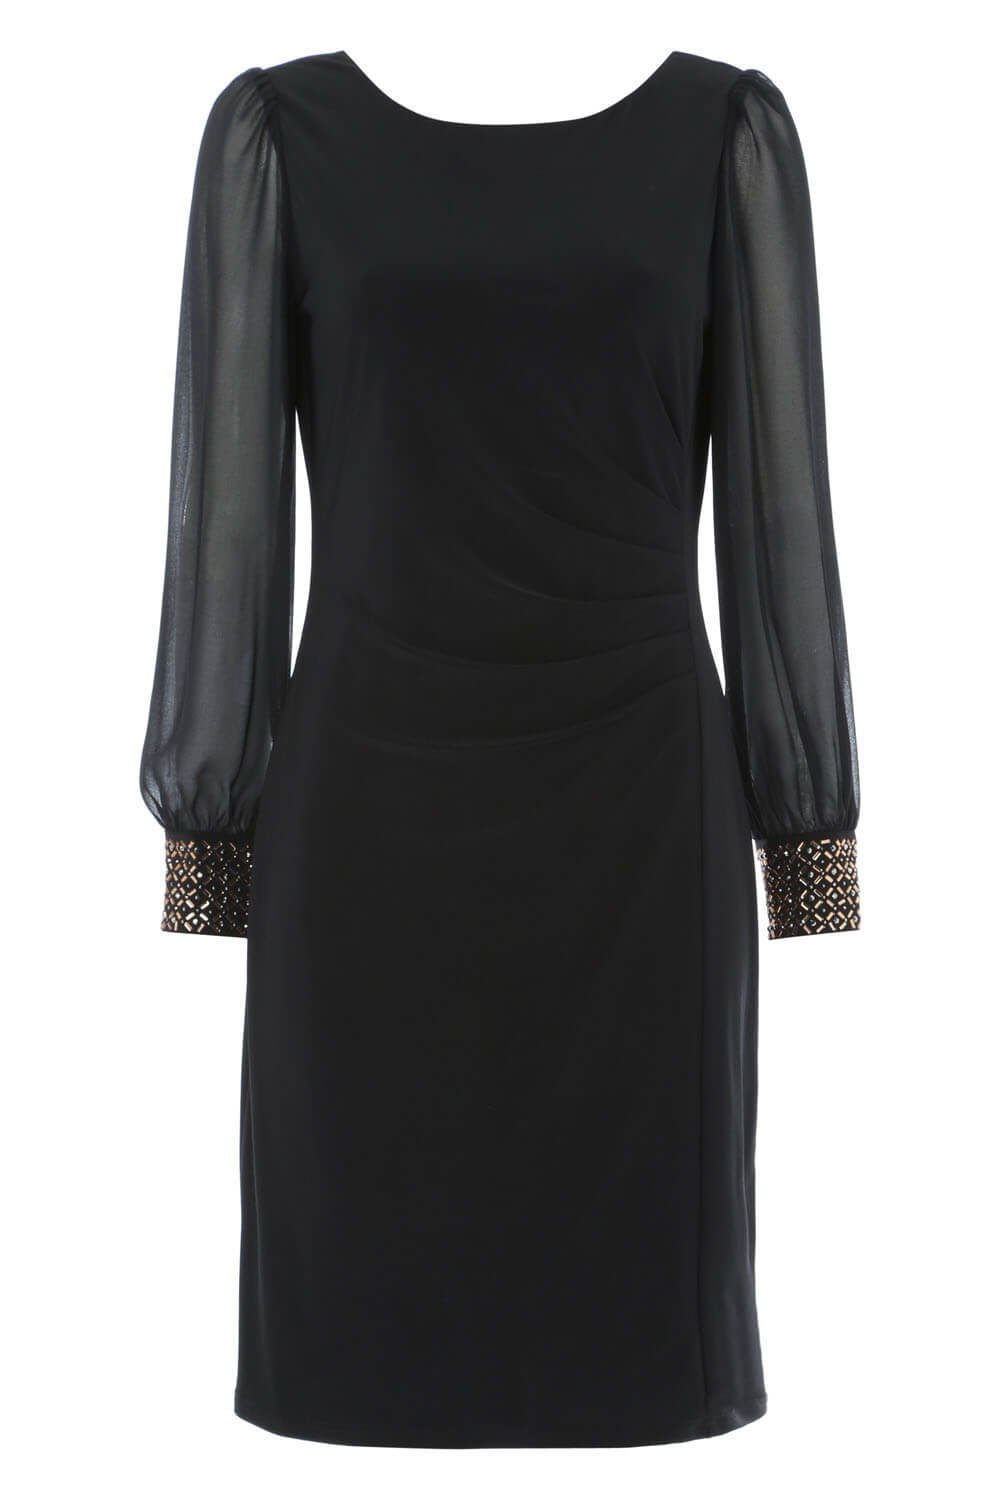 Black Embellished Cuff Evening Dress, Image 5 of 5